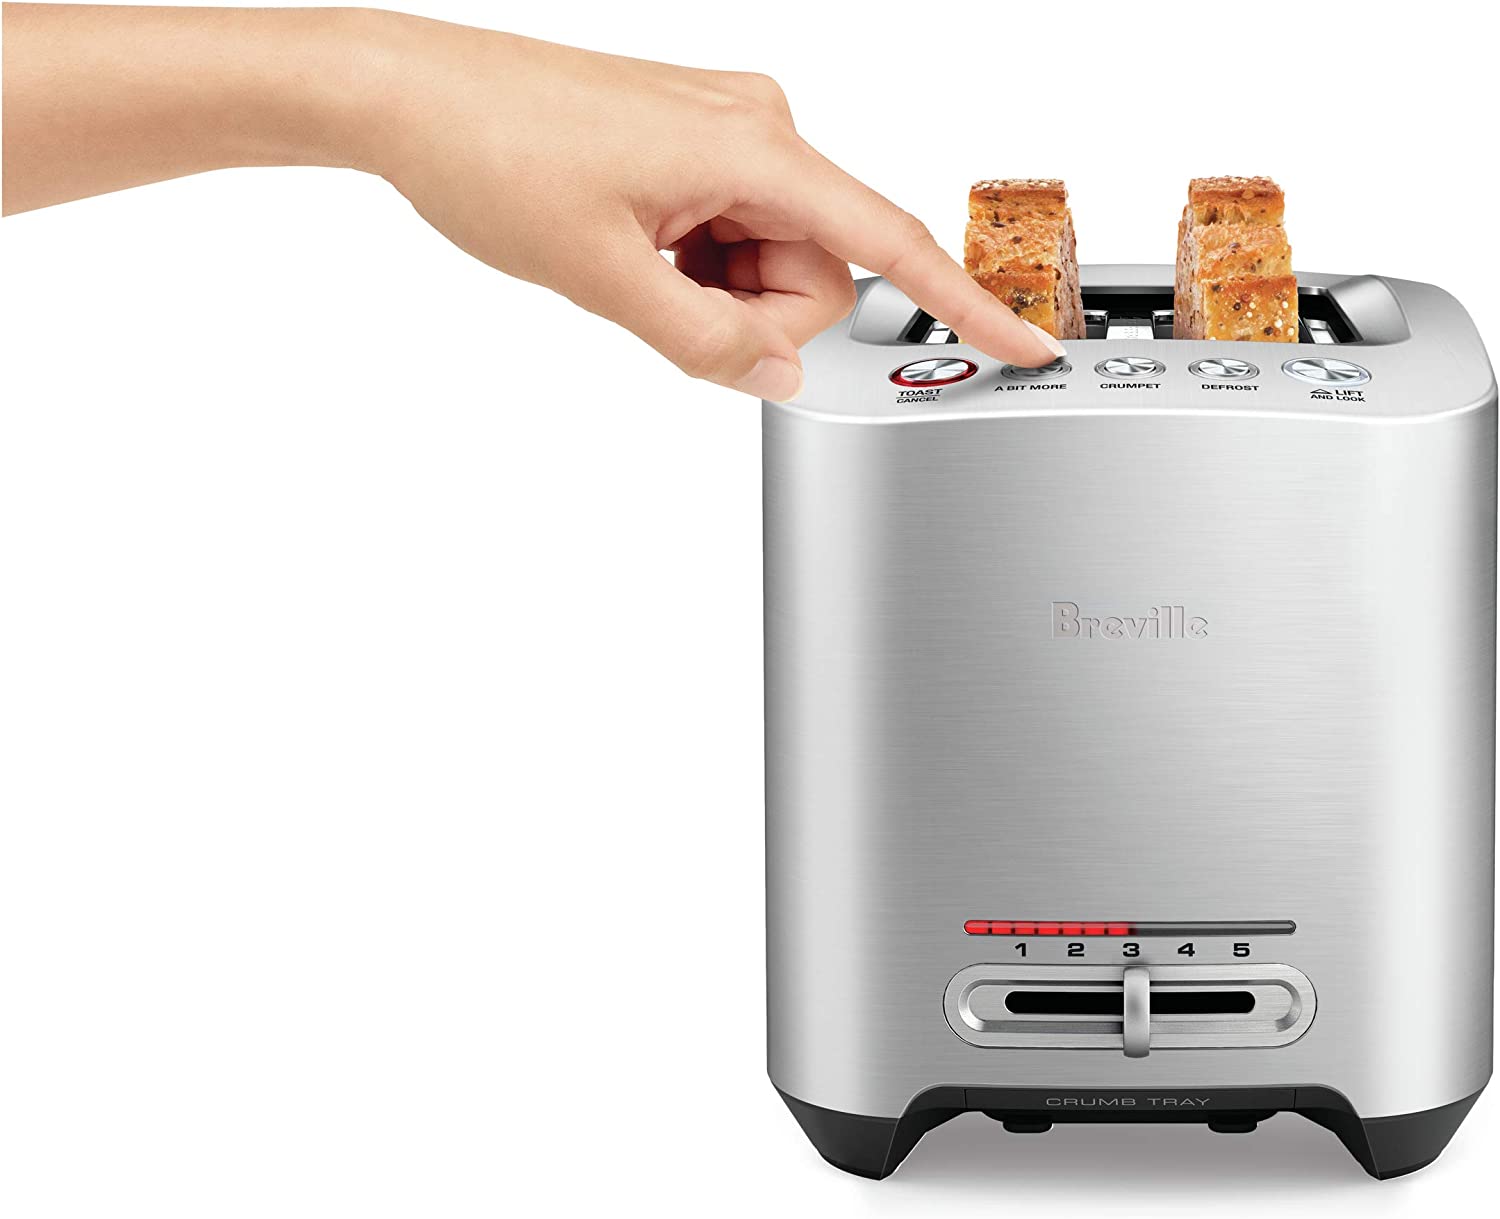 Breville BTA720XL Bit More 2-Slice Toaster, Brushed Stainless Steel